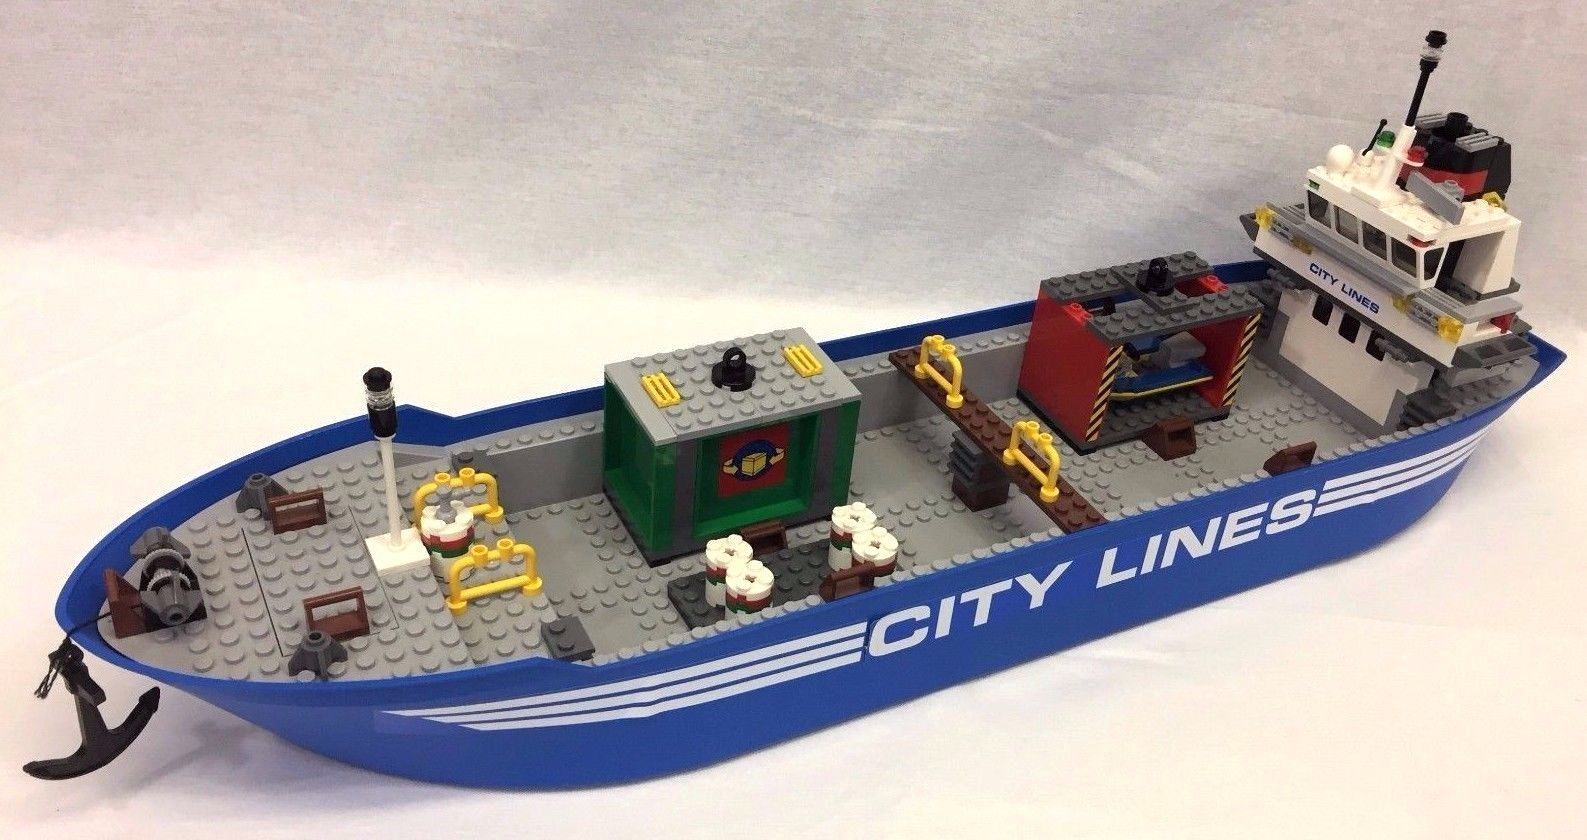 destillation paraply Mundtlig Lego City 7994 Transport Harbor Cargo and 50 similar items